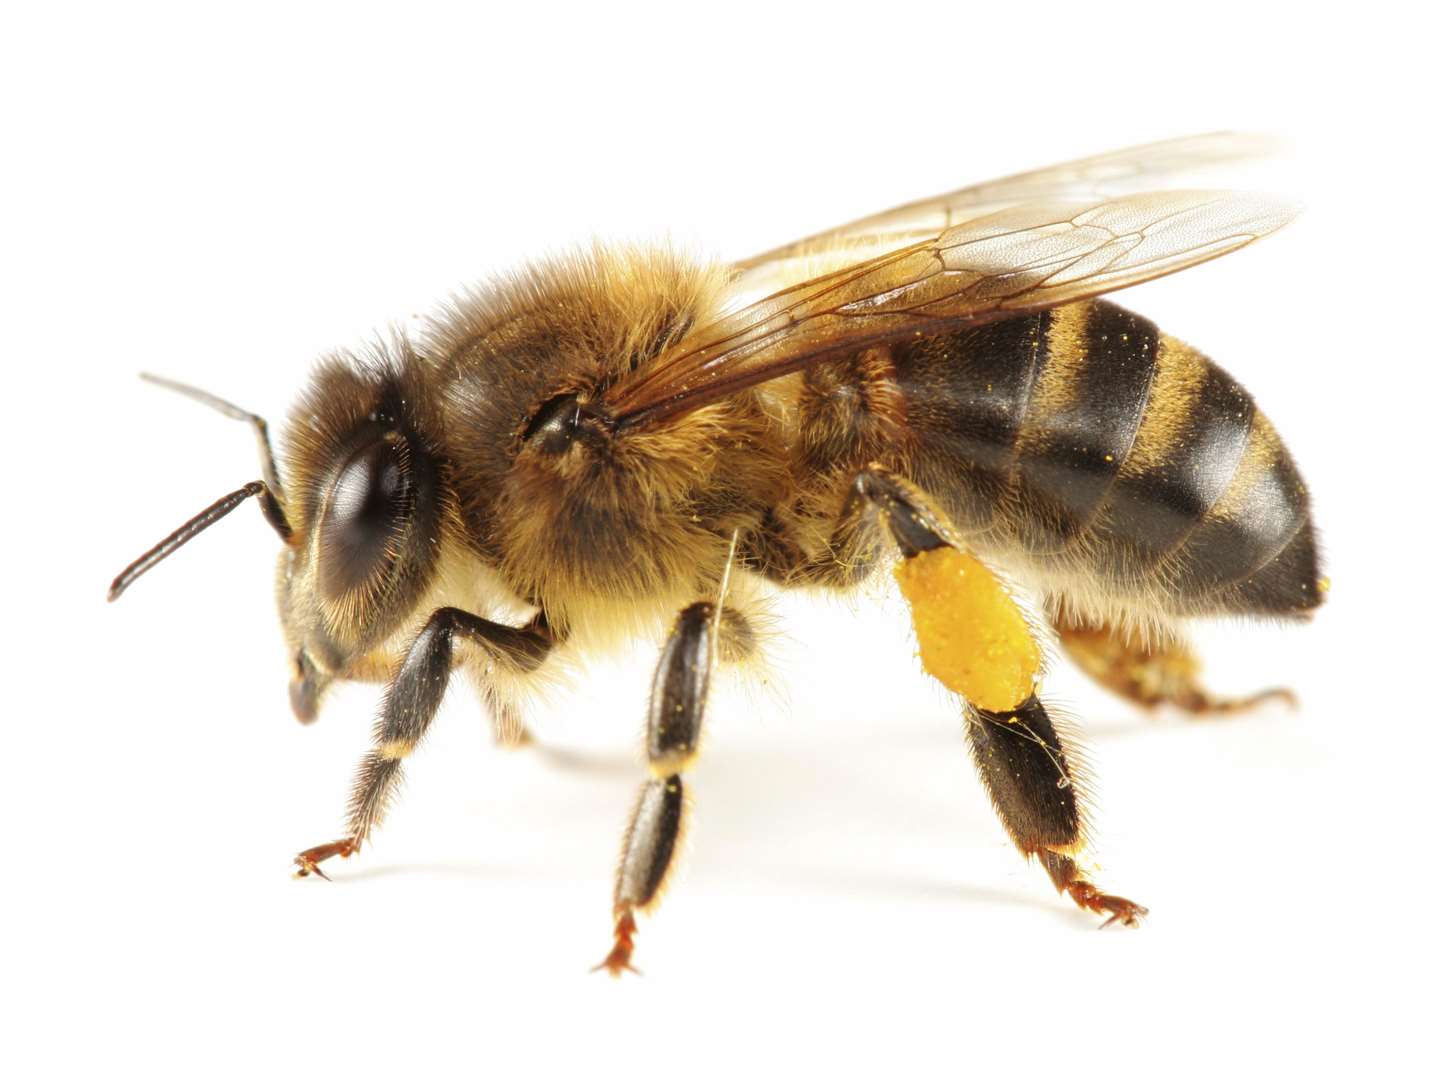 Honey bee. Stock image.